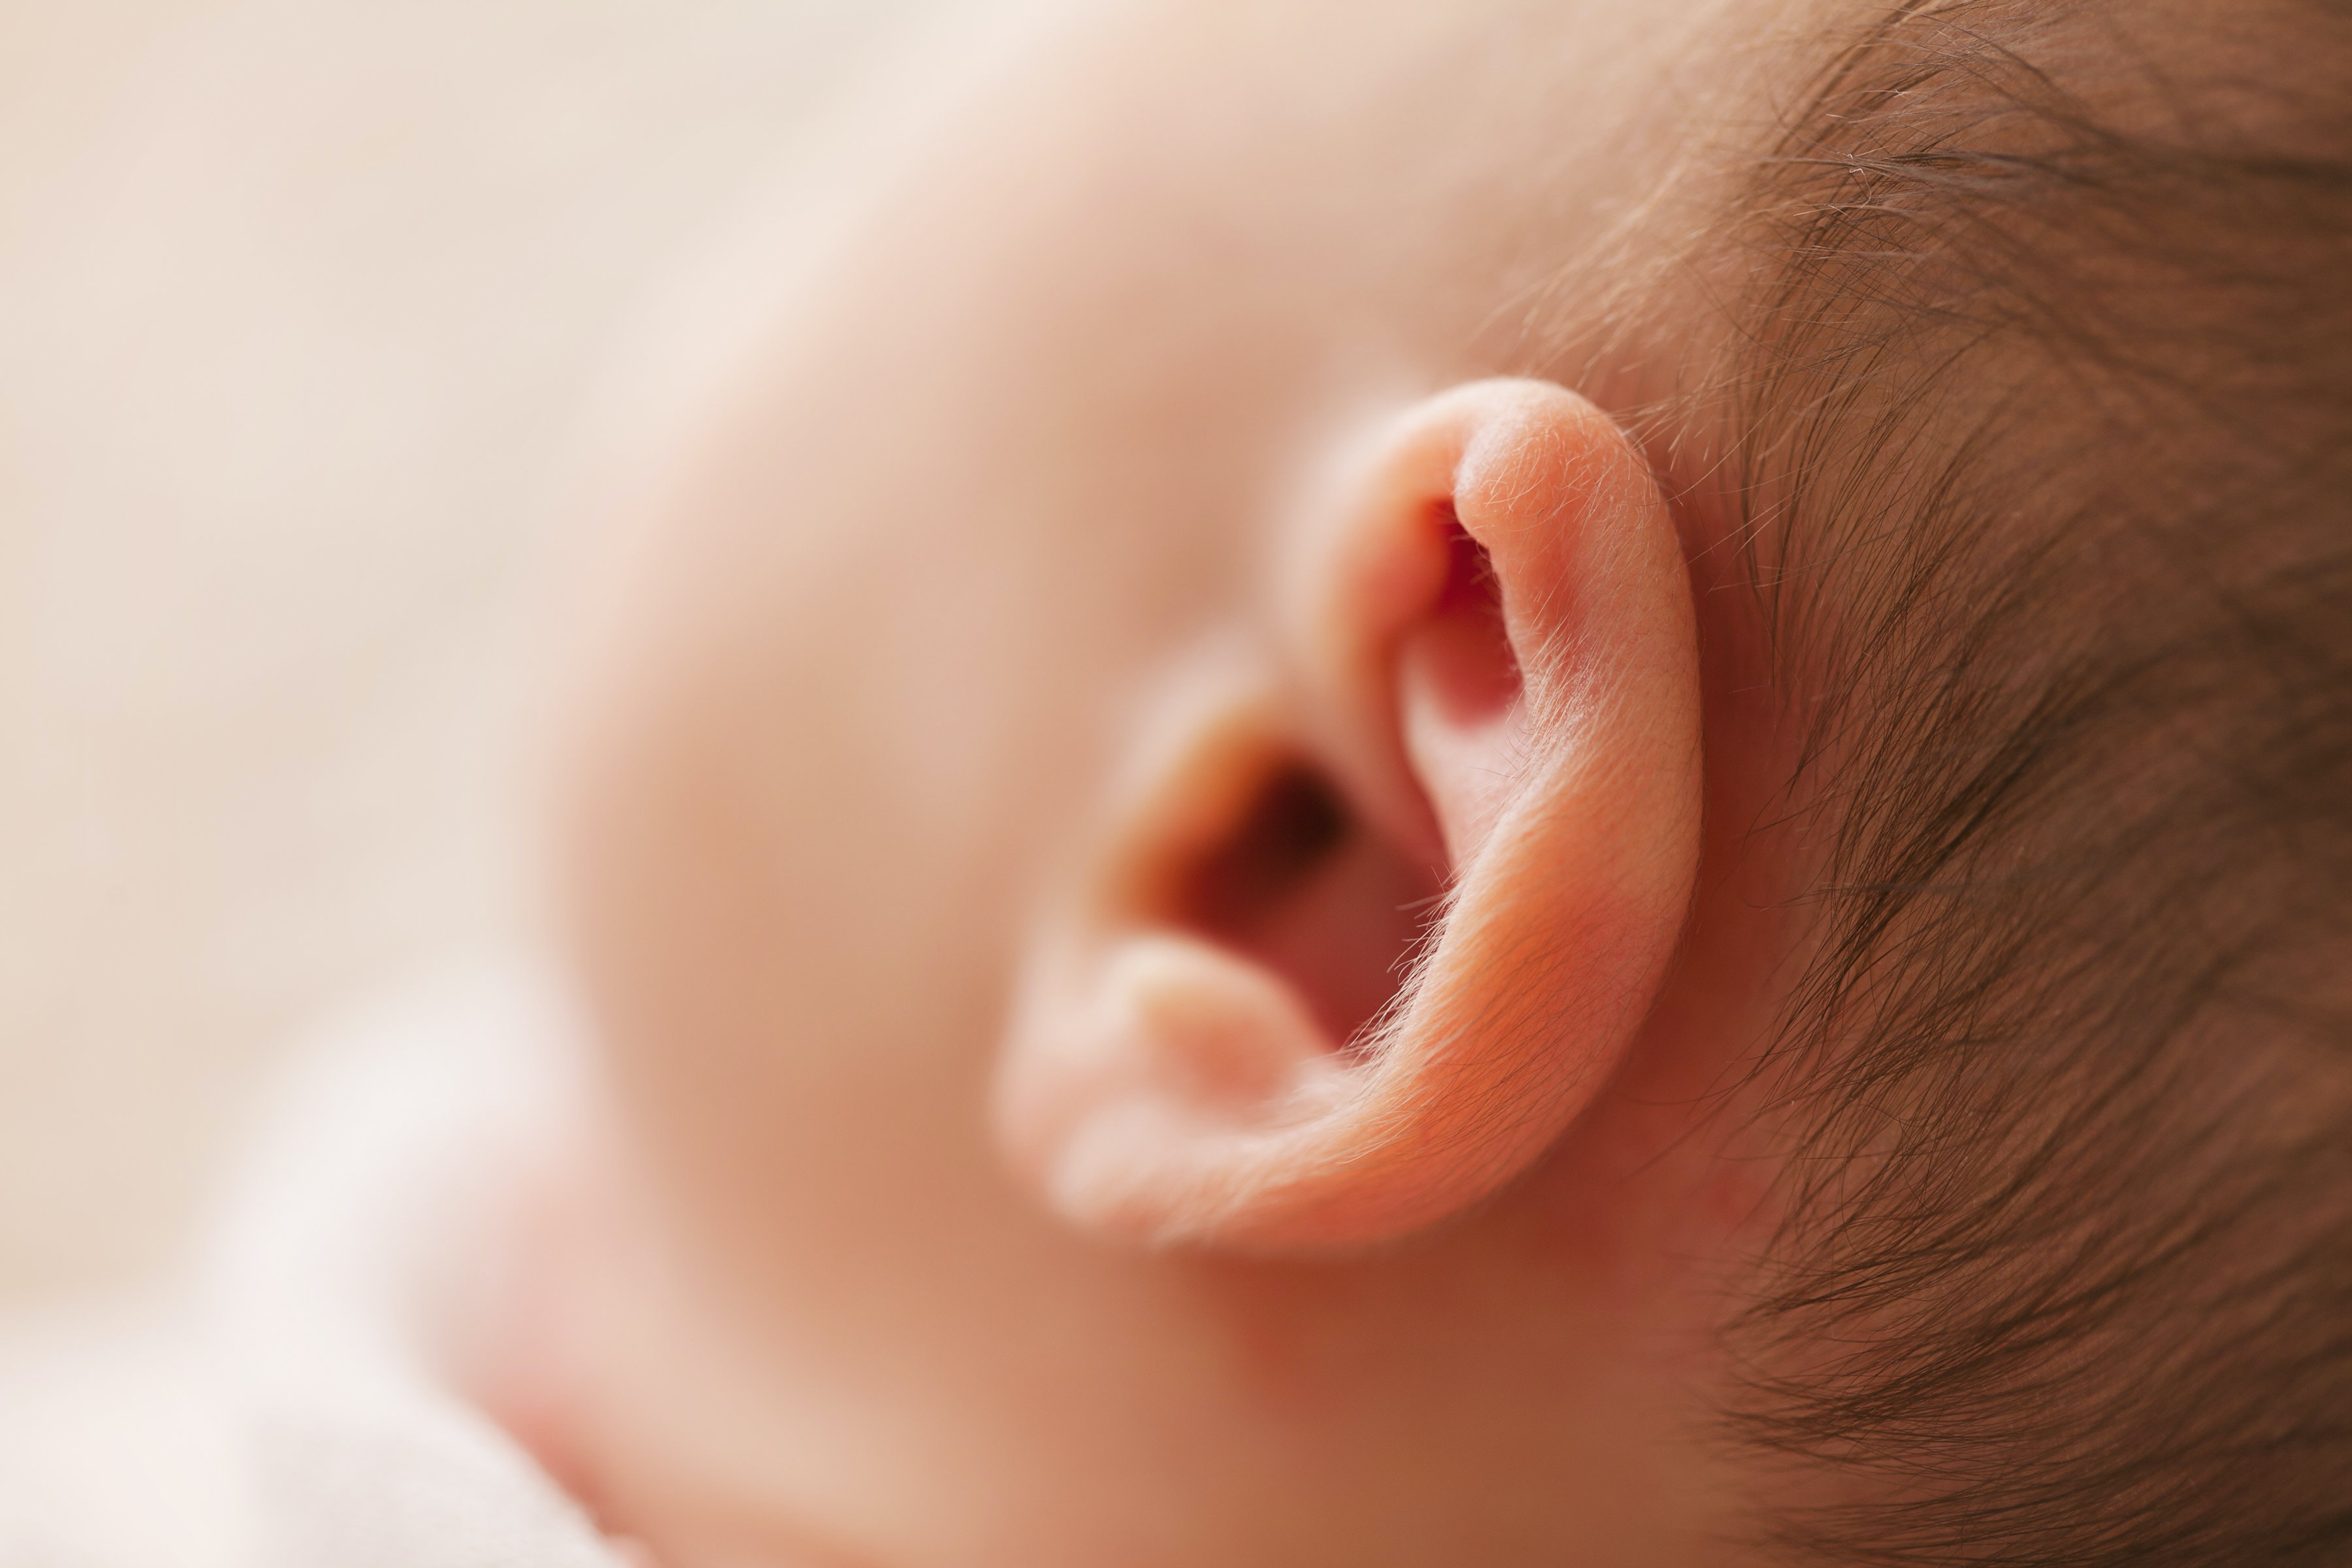 Baby's ears.  